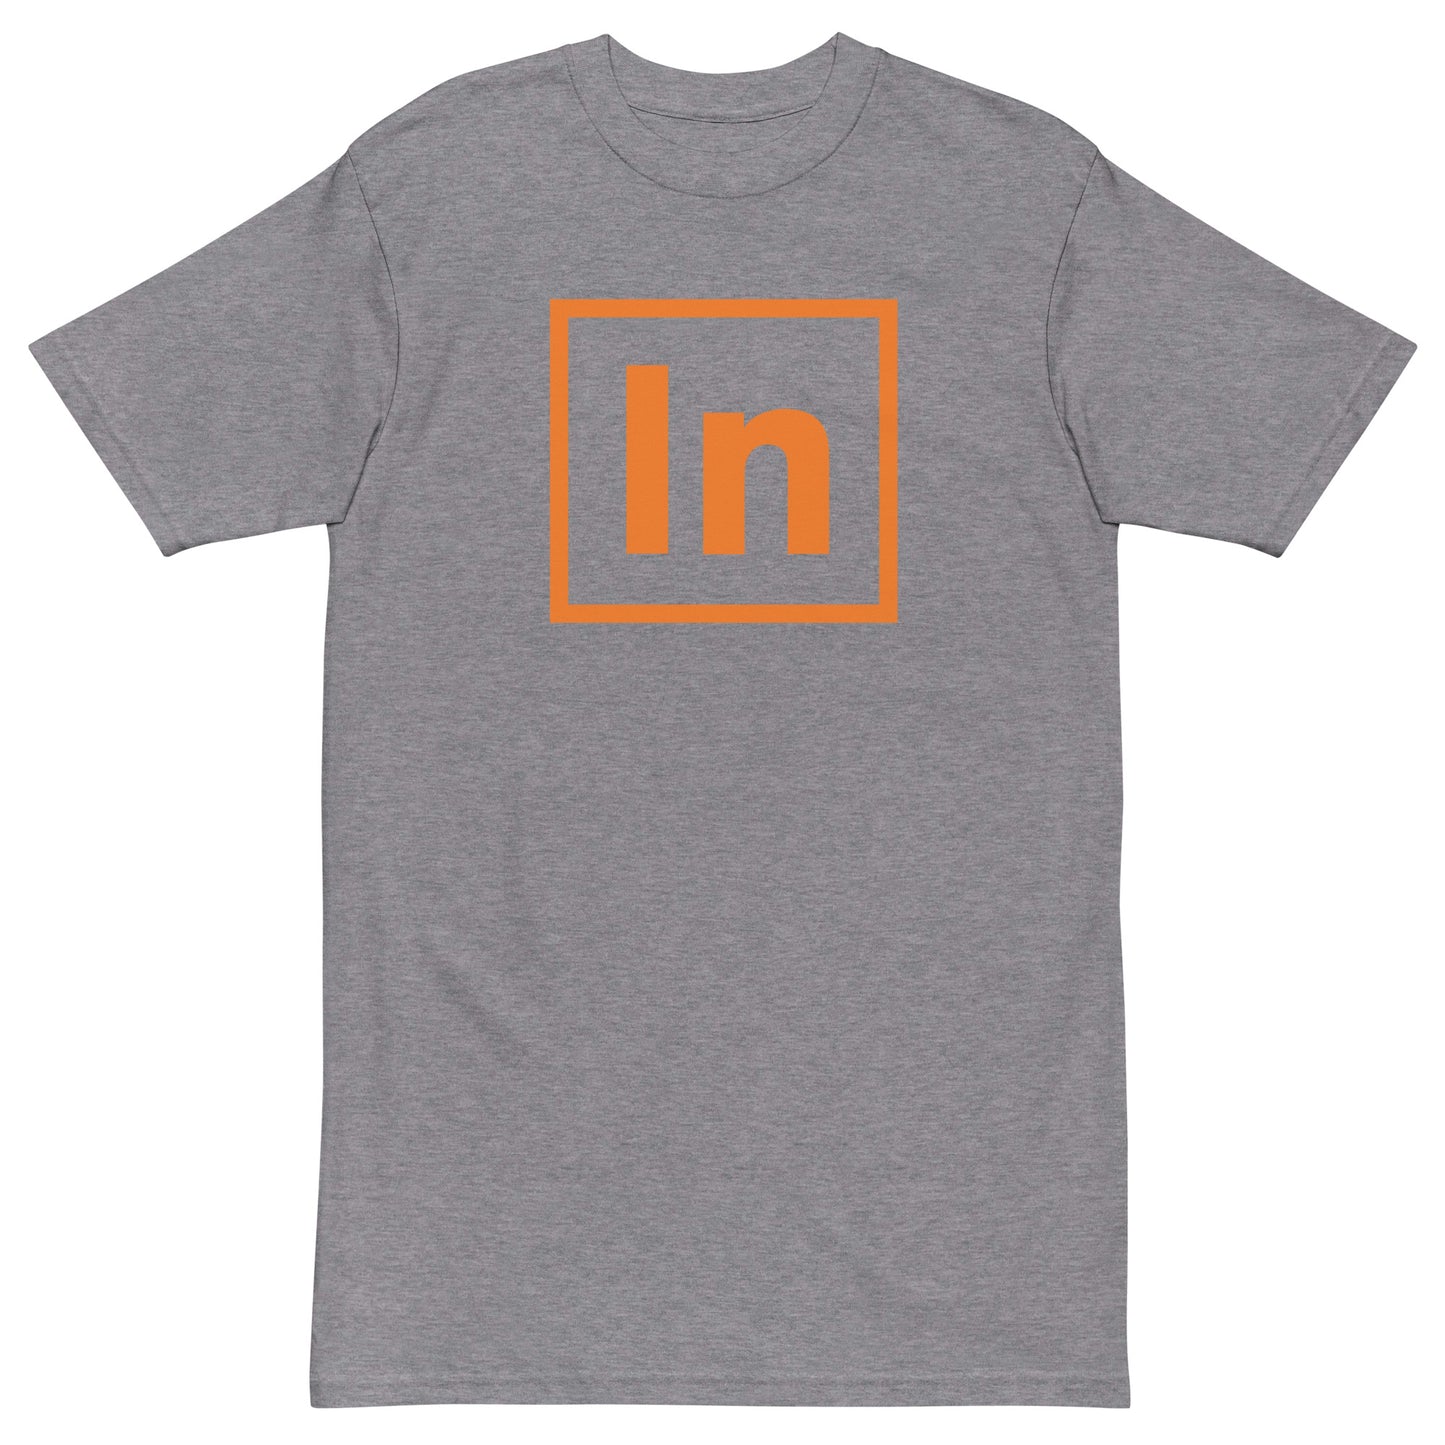 Unisex Heavyweight T-shirt (100% Cotton) - "In"